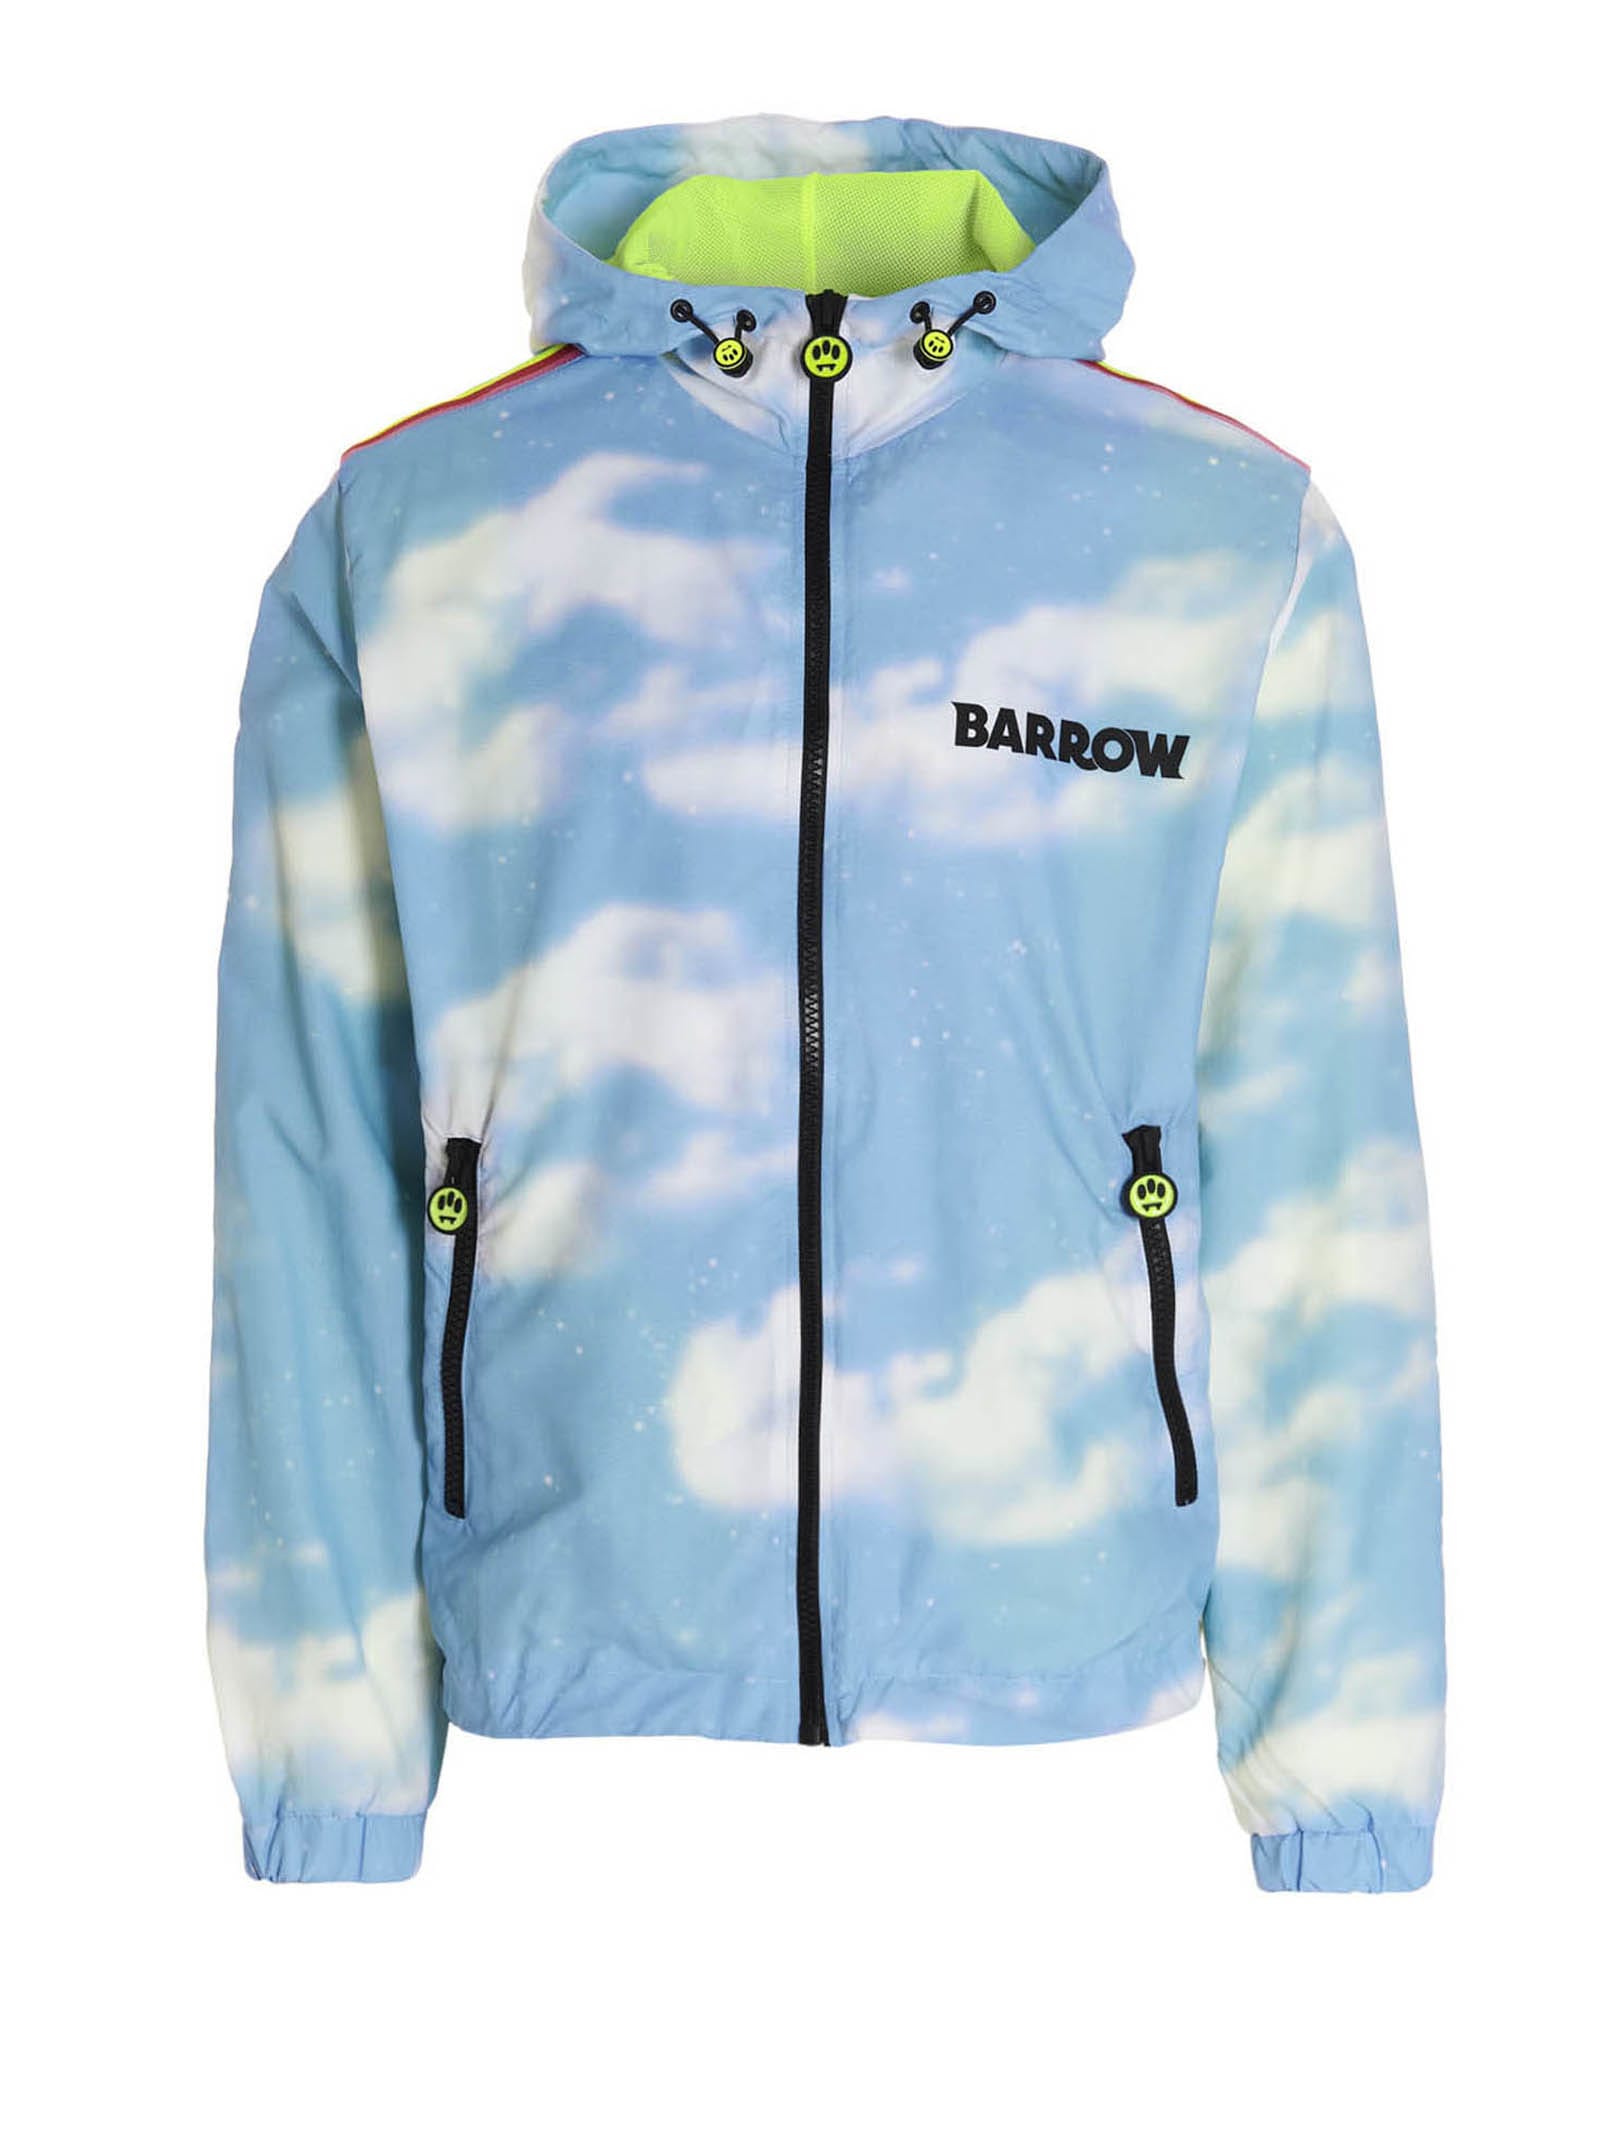 Barrow rainbow Jacket